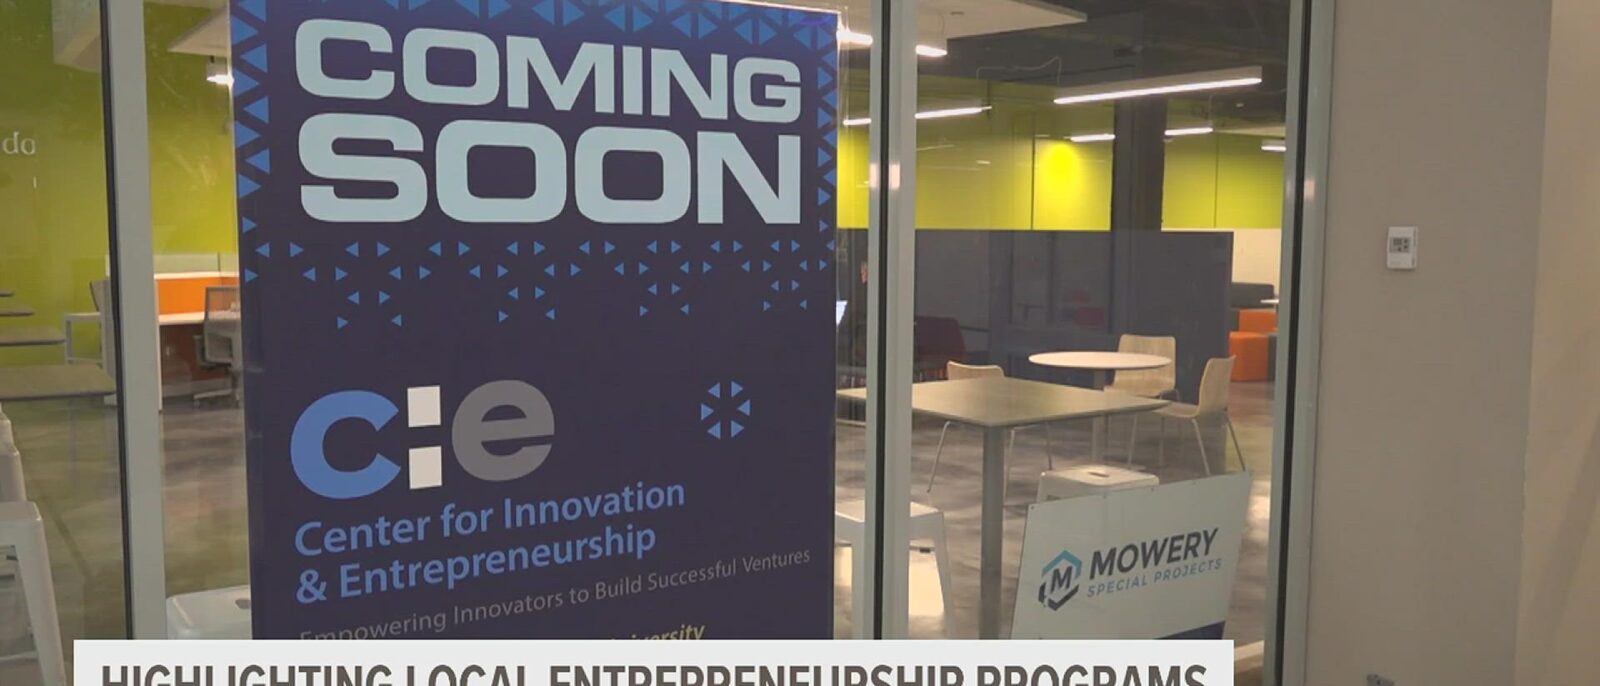 Entrepreneurship opportunities available through CIE’s efforts